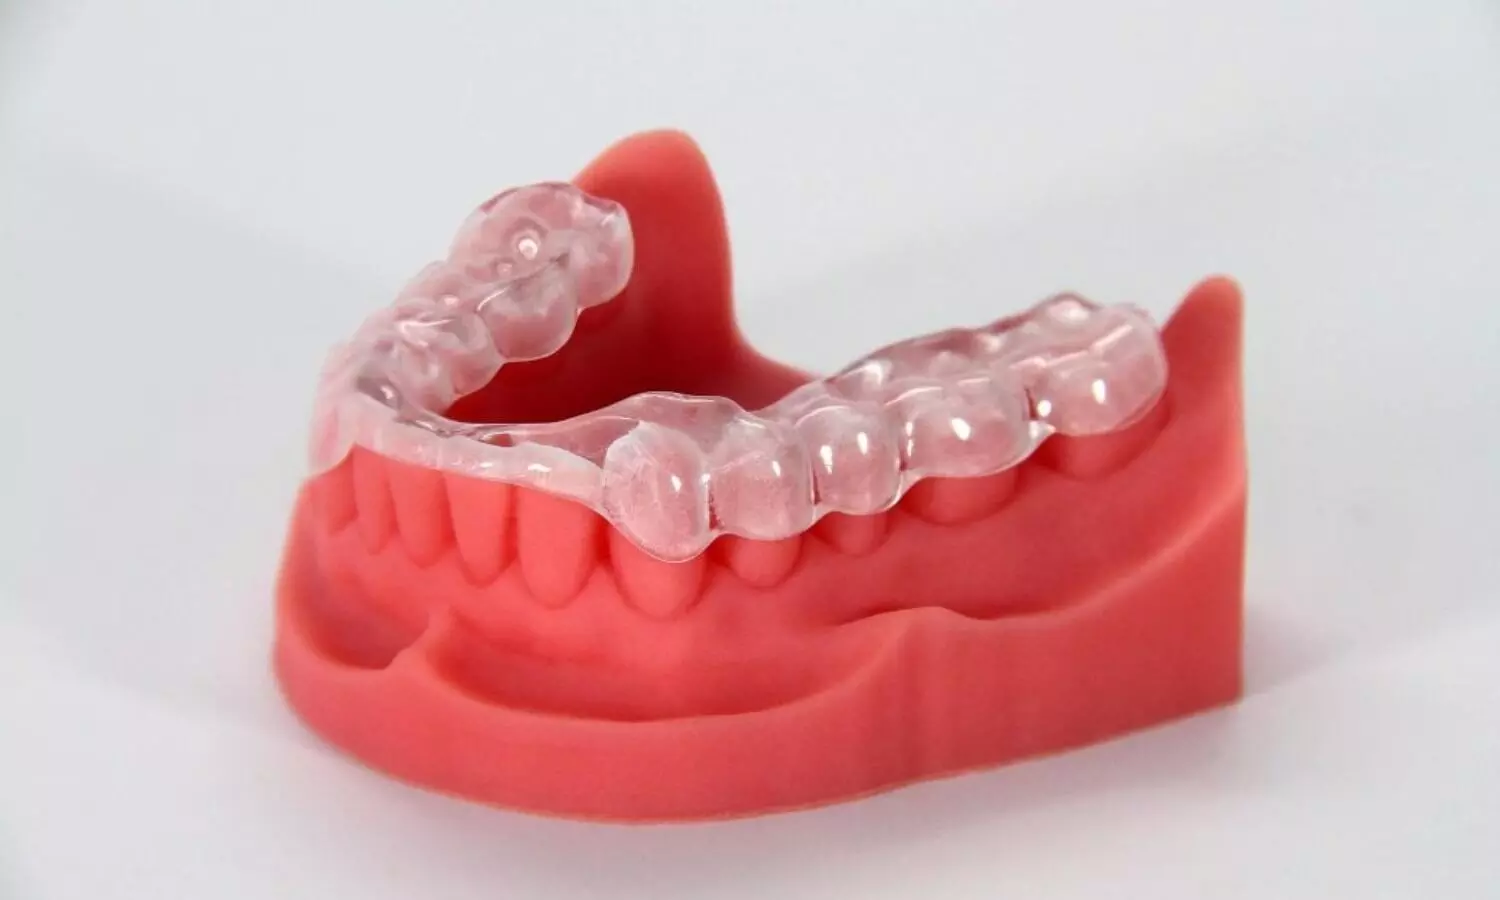 Hybrid resin-based composites useful in printing efficient dental crowns: Study